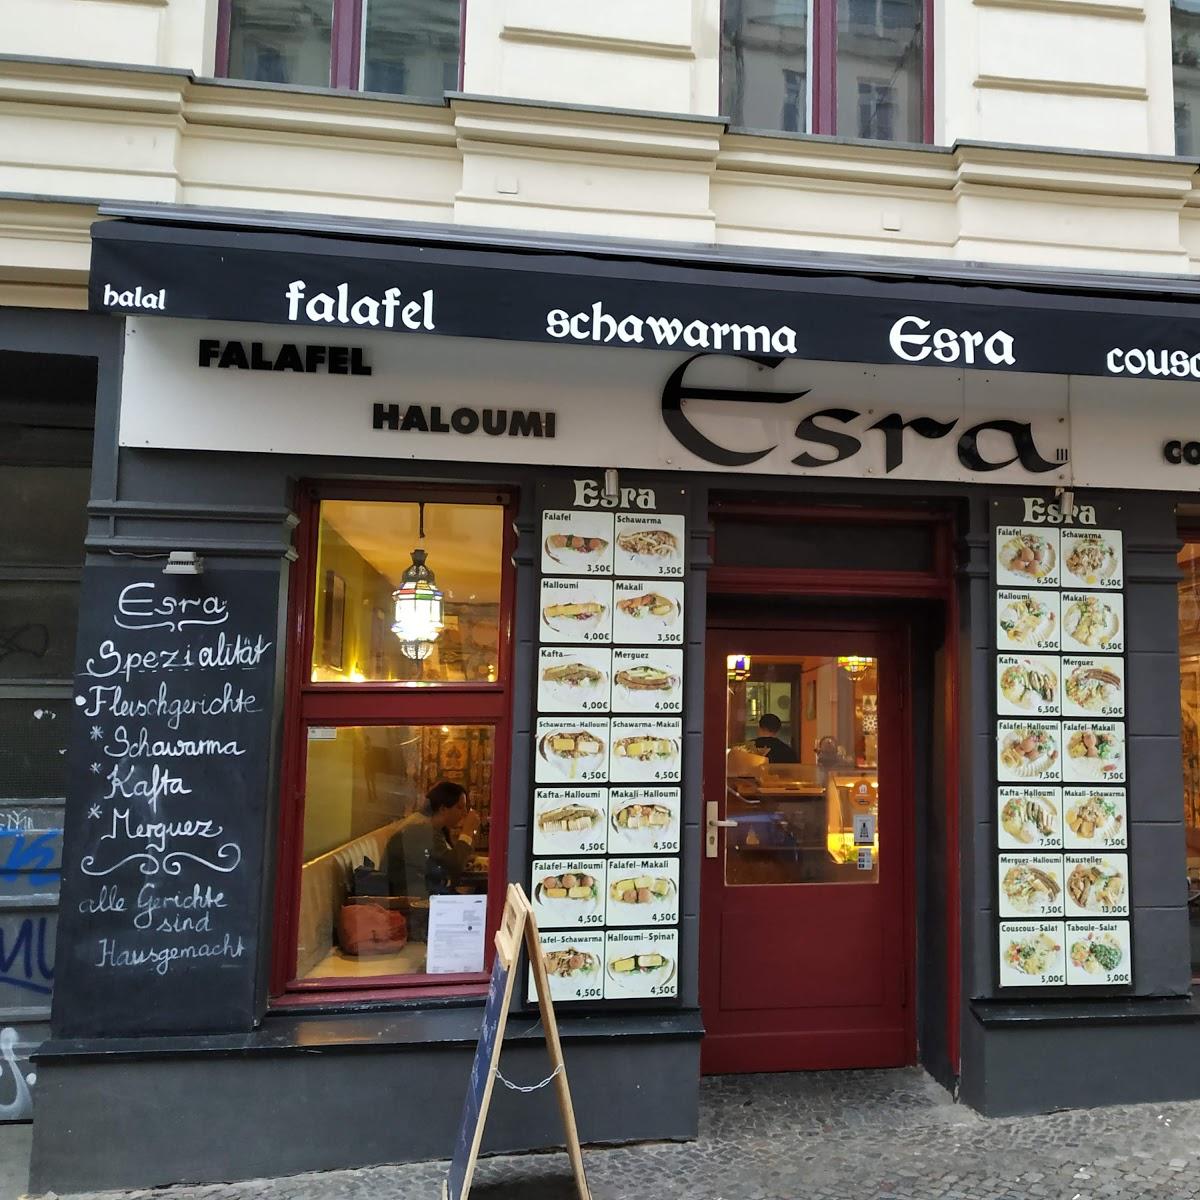 Restaurant "Esra" in Berlin